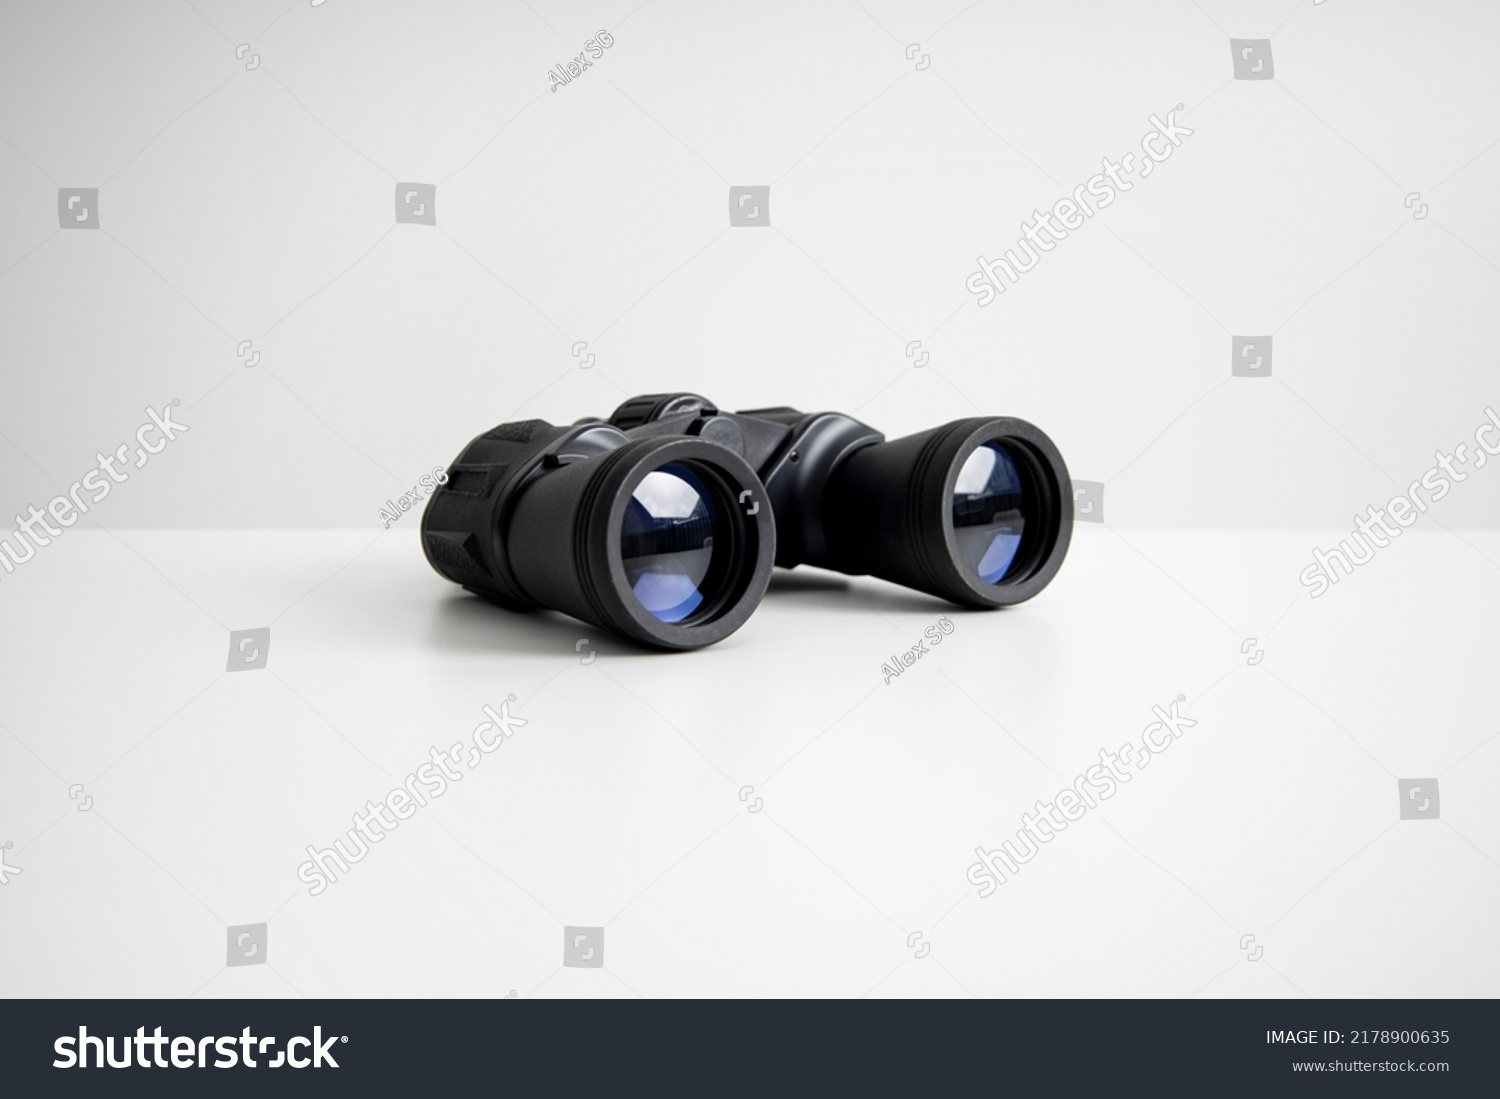 Black binoculars lying on a white background. Side view. #2178900635